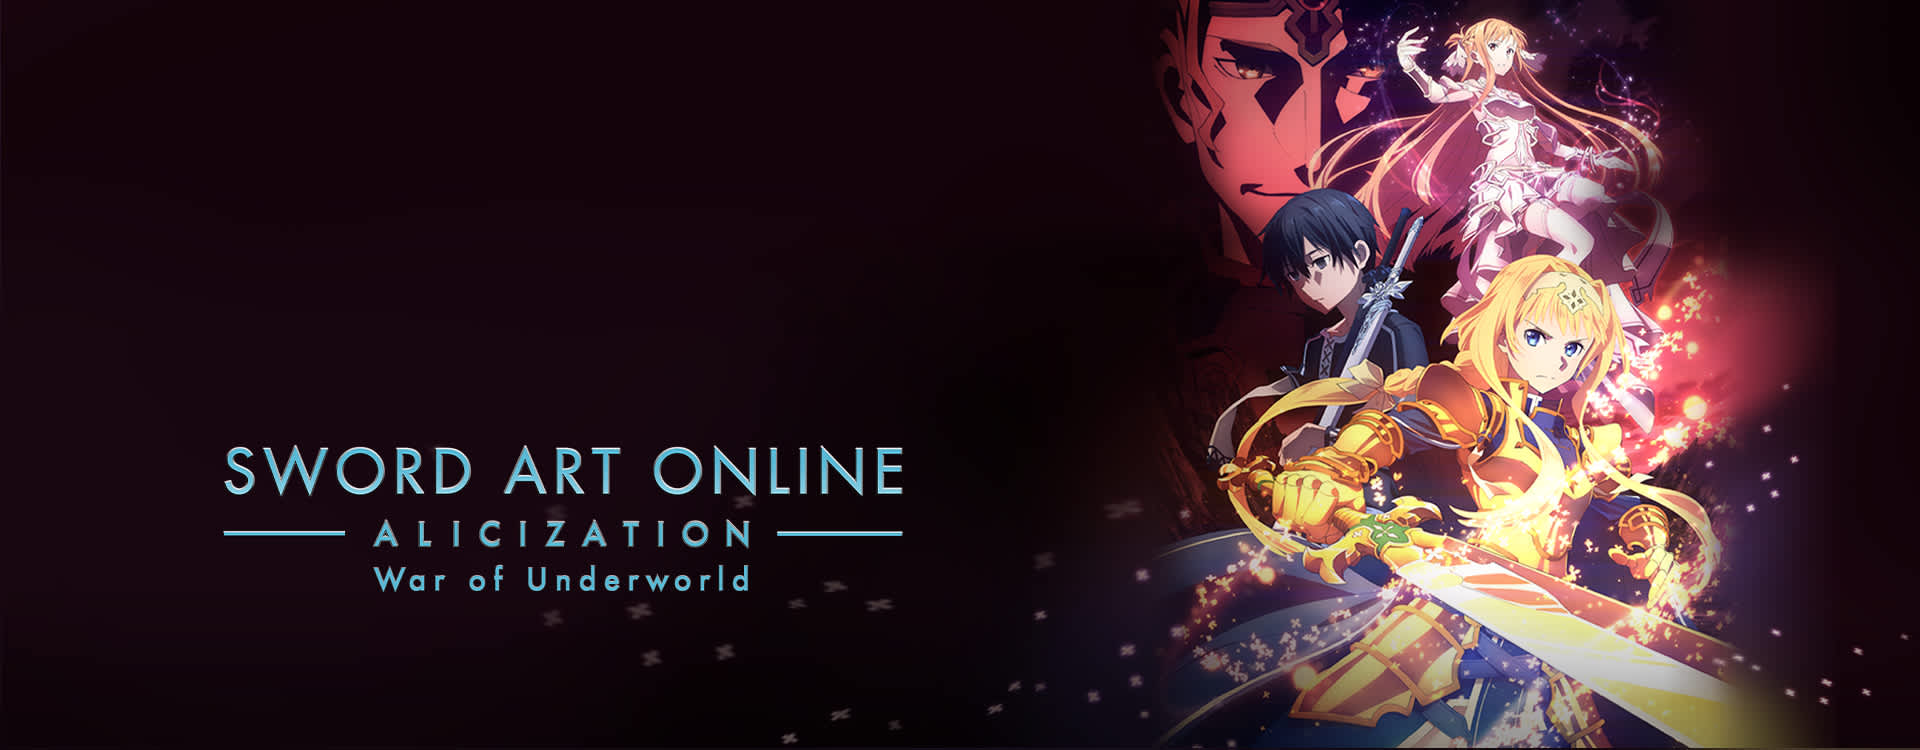 Watch Sword Art Online Sub Dub Action Adventure Fantasy Romance Anime Funimation